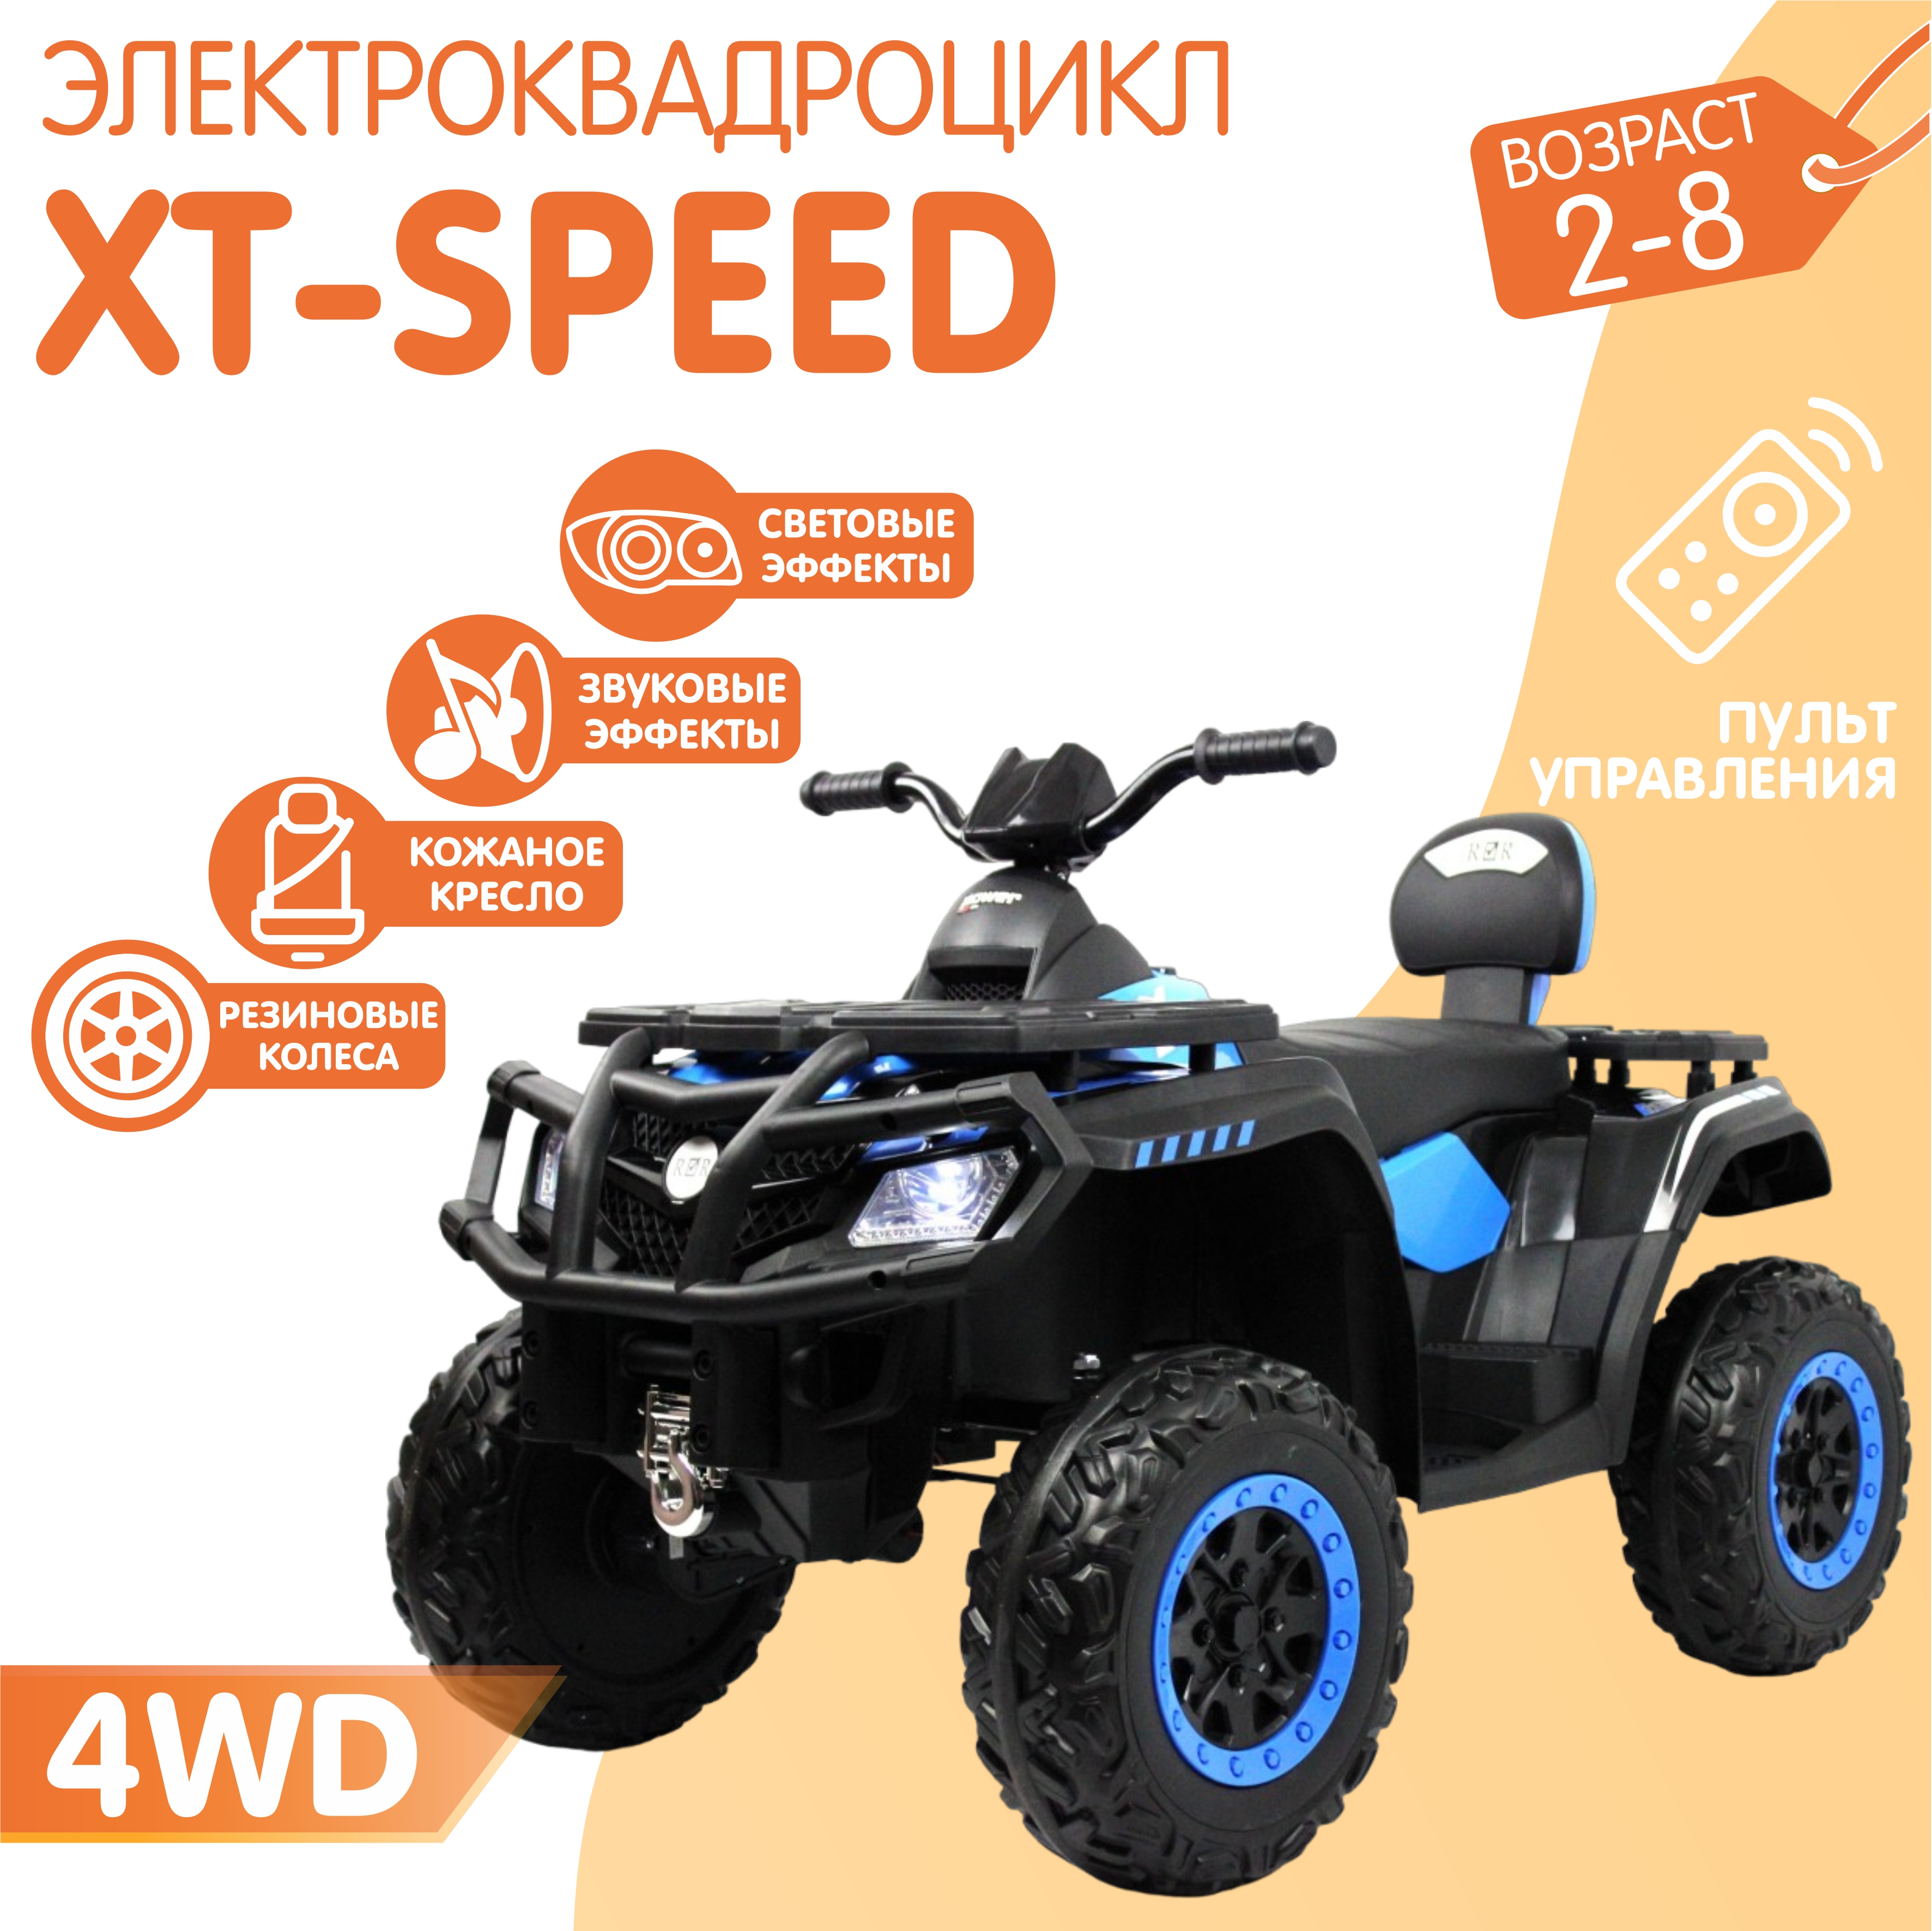 Электромобиль NOVAKIDS квадроцикл xt-speed 4wd синий + пульт